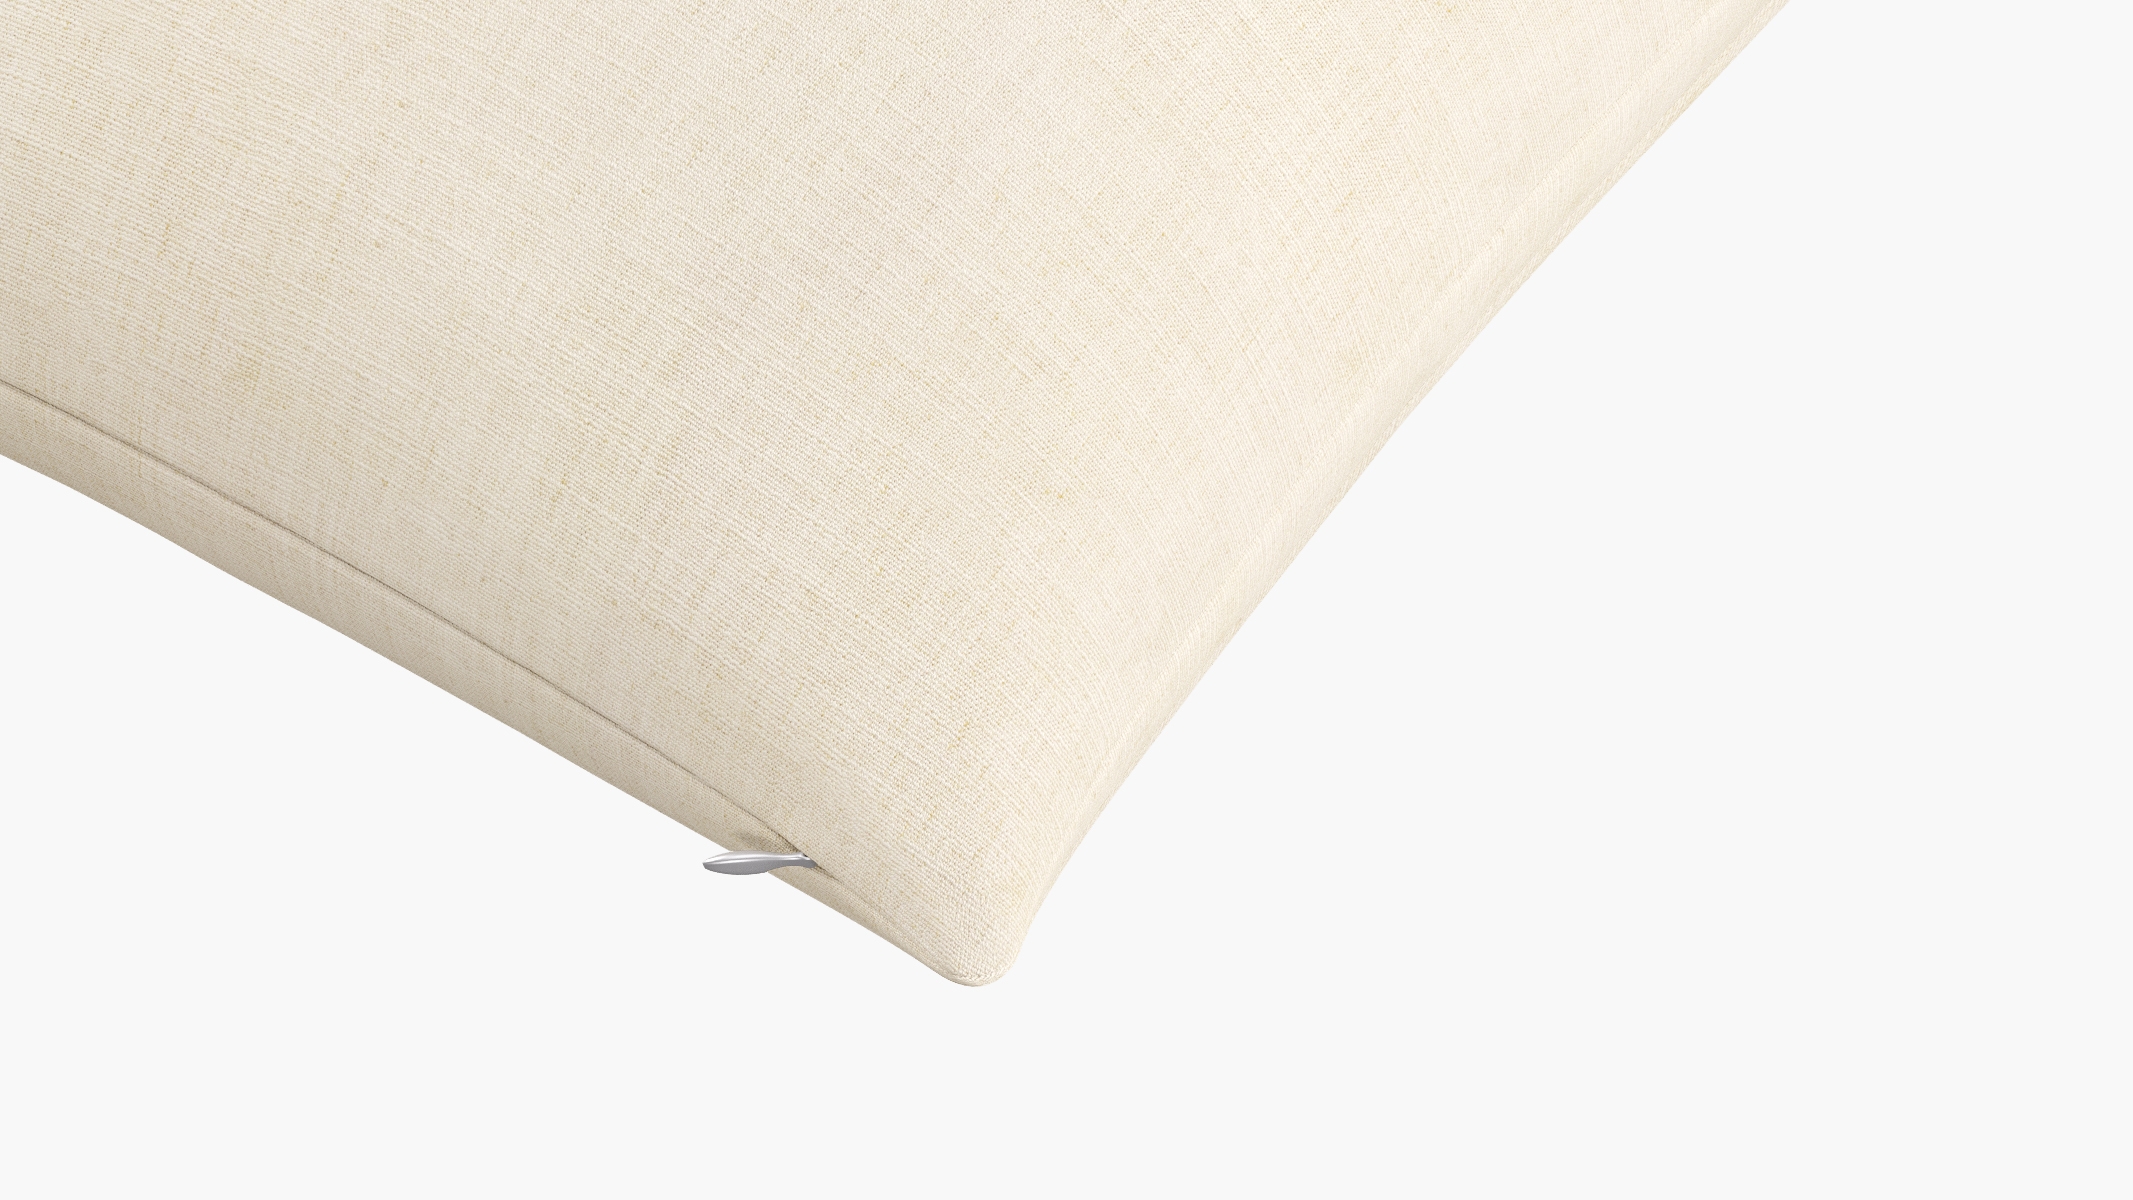 Throw Pillow 22", Talc Everyday Linen, 22" x 22" - Image 1